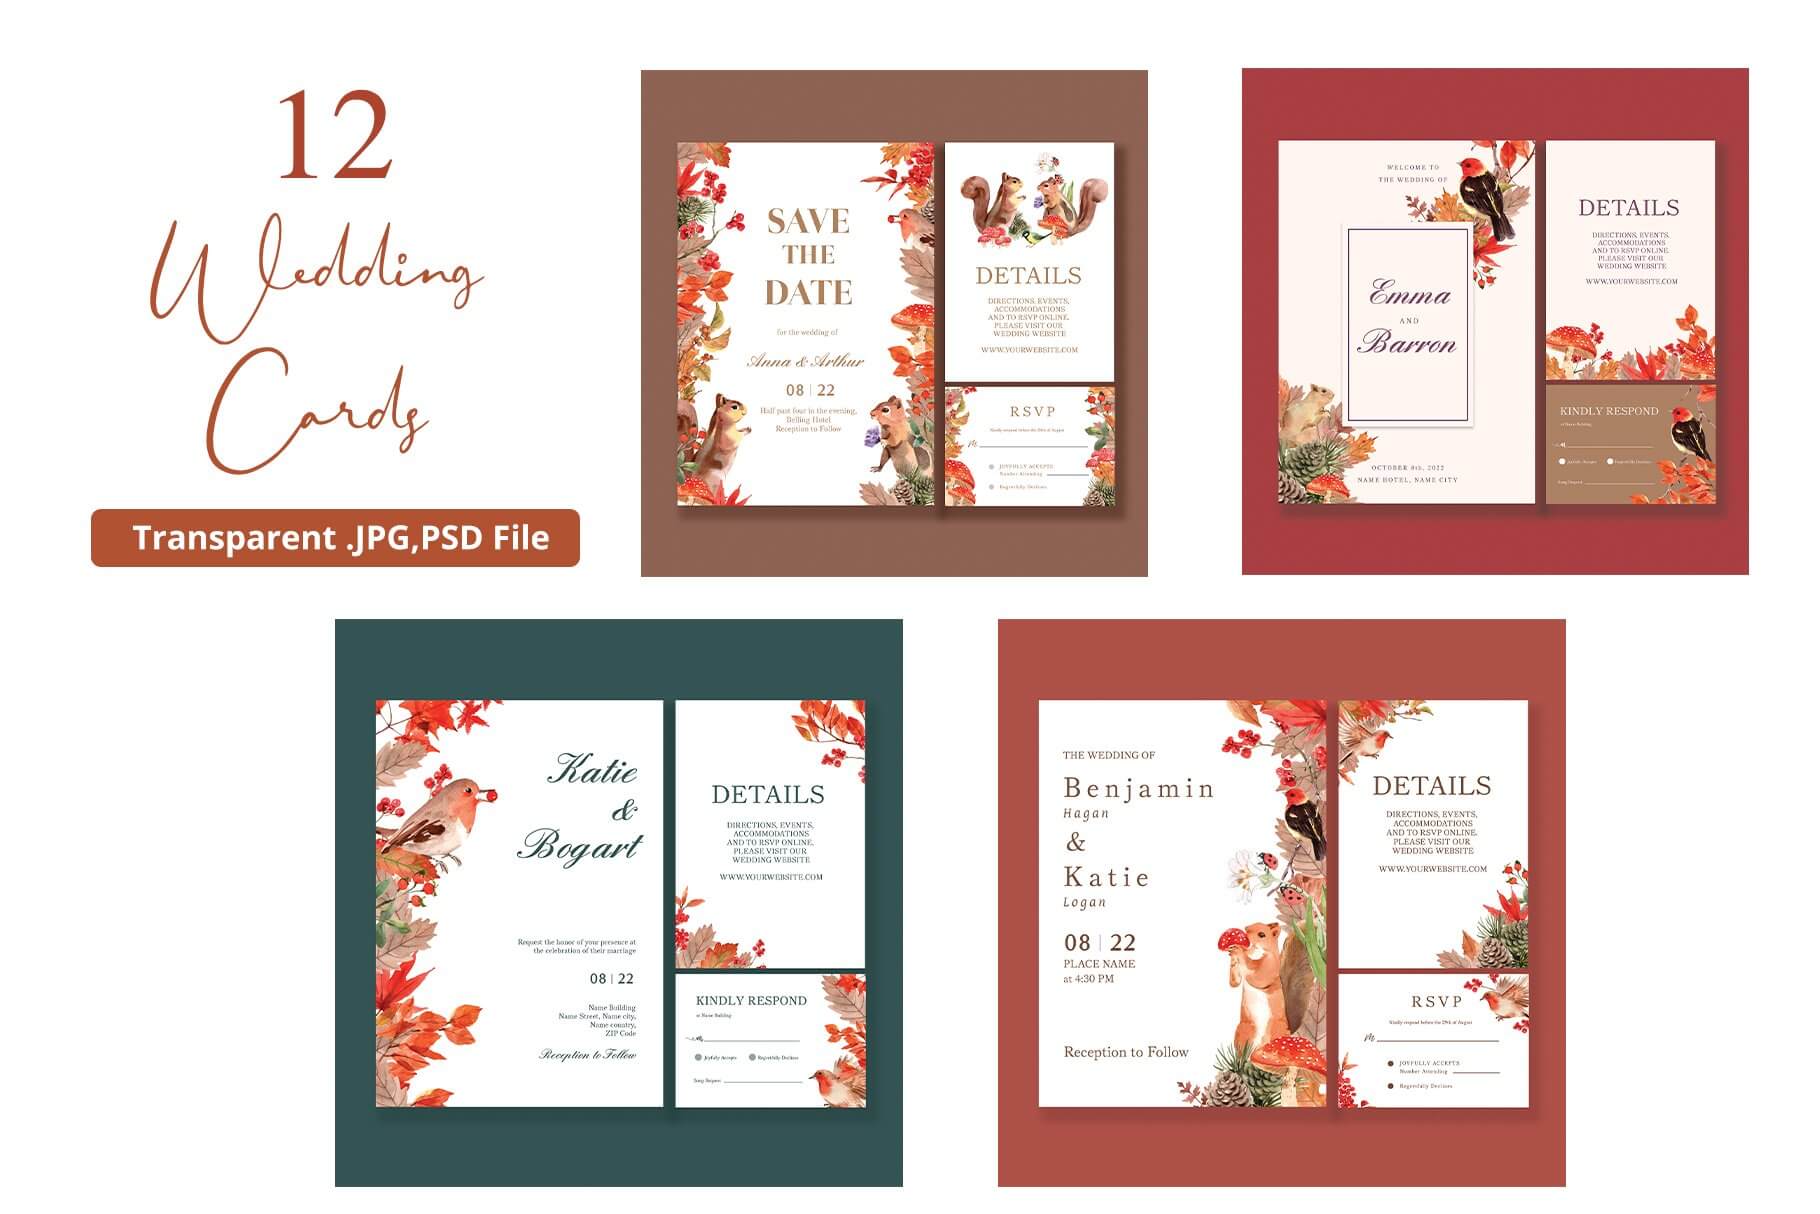 12 wedding cards with autumn design.